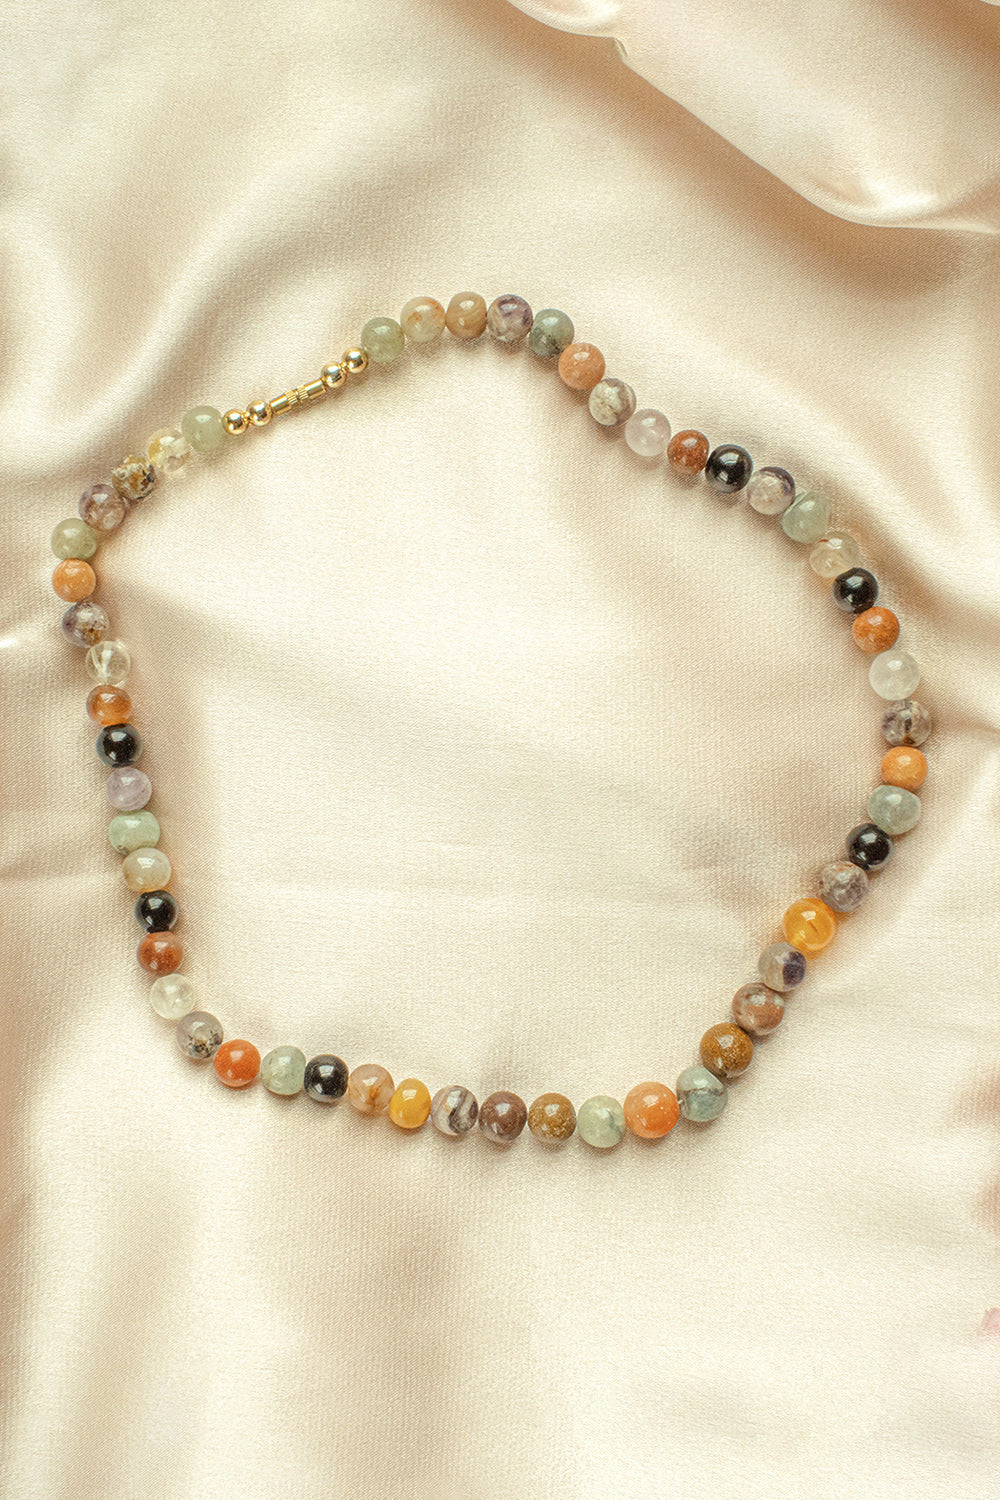 Flowing Energy Chakra Gemstones Necklace